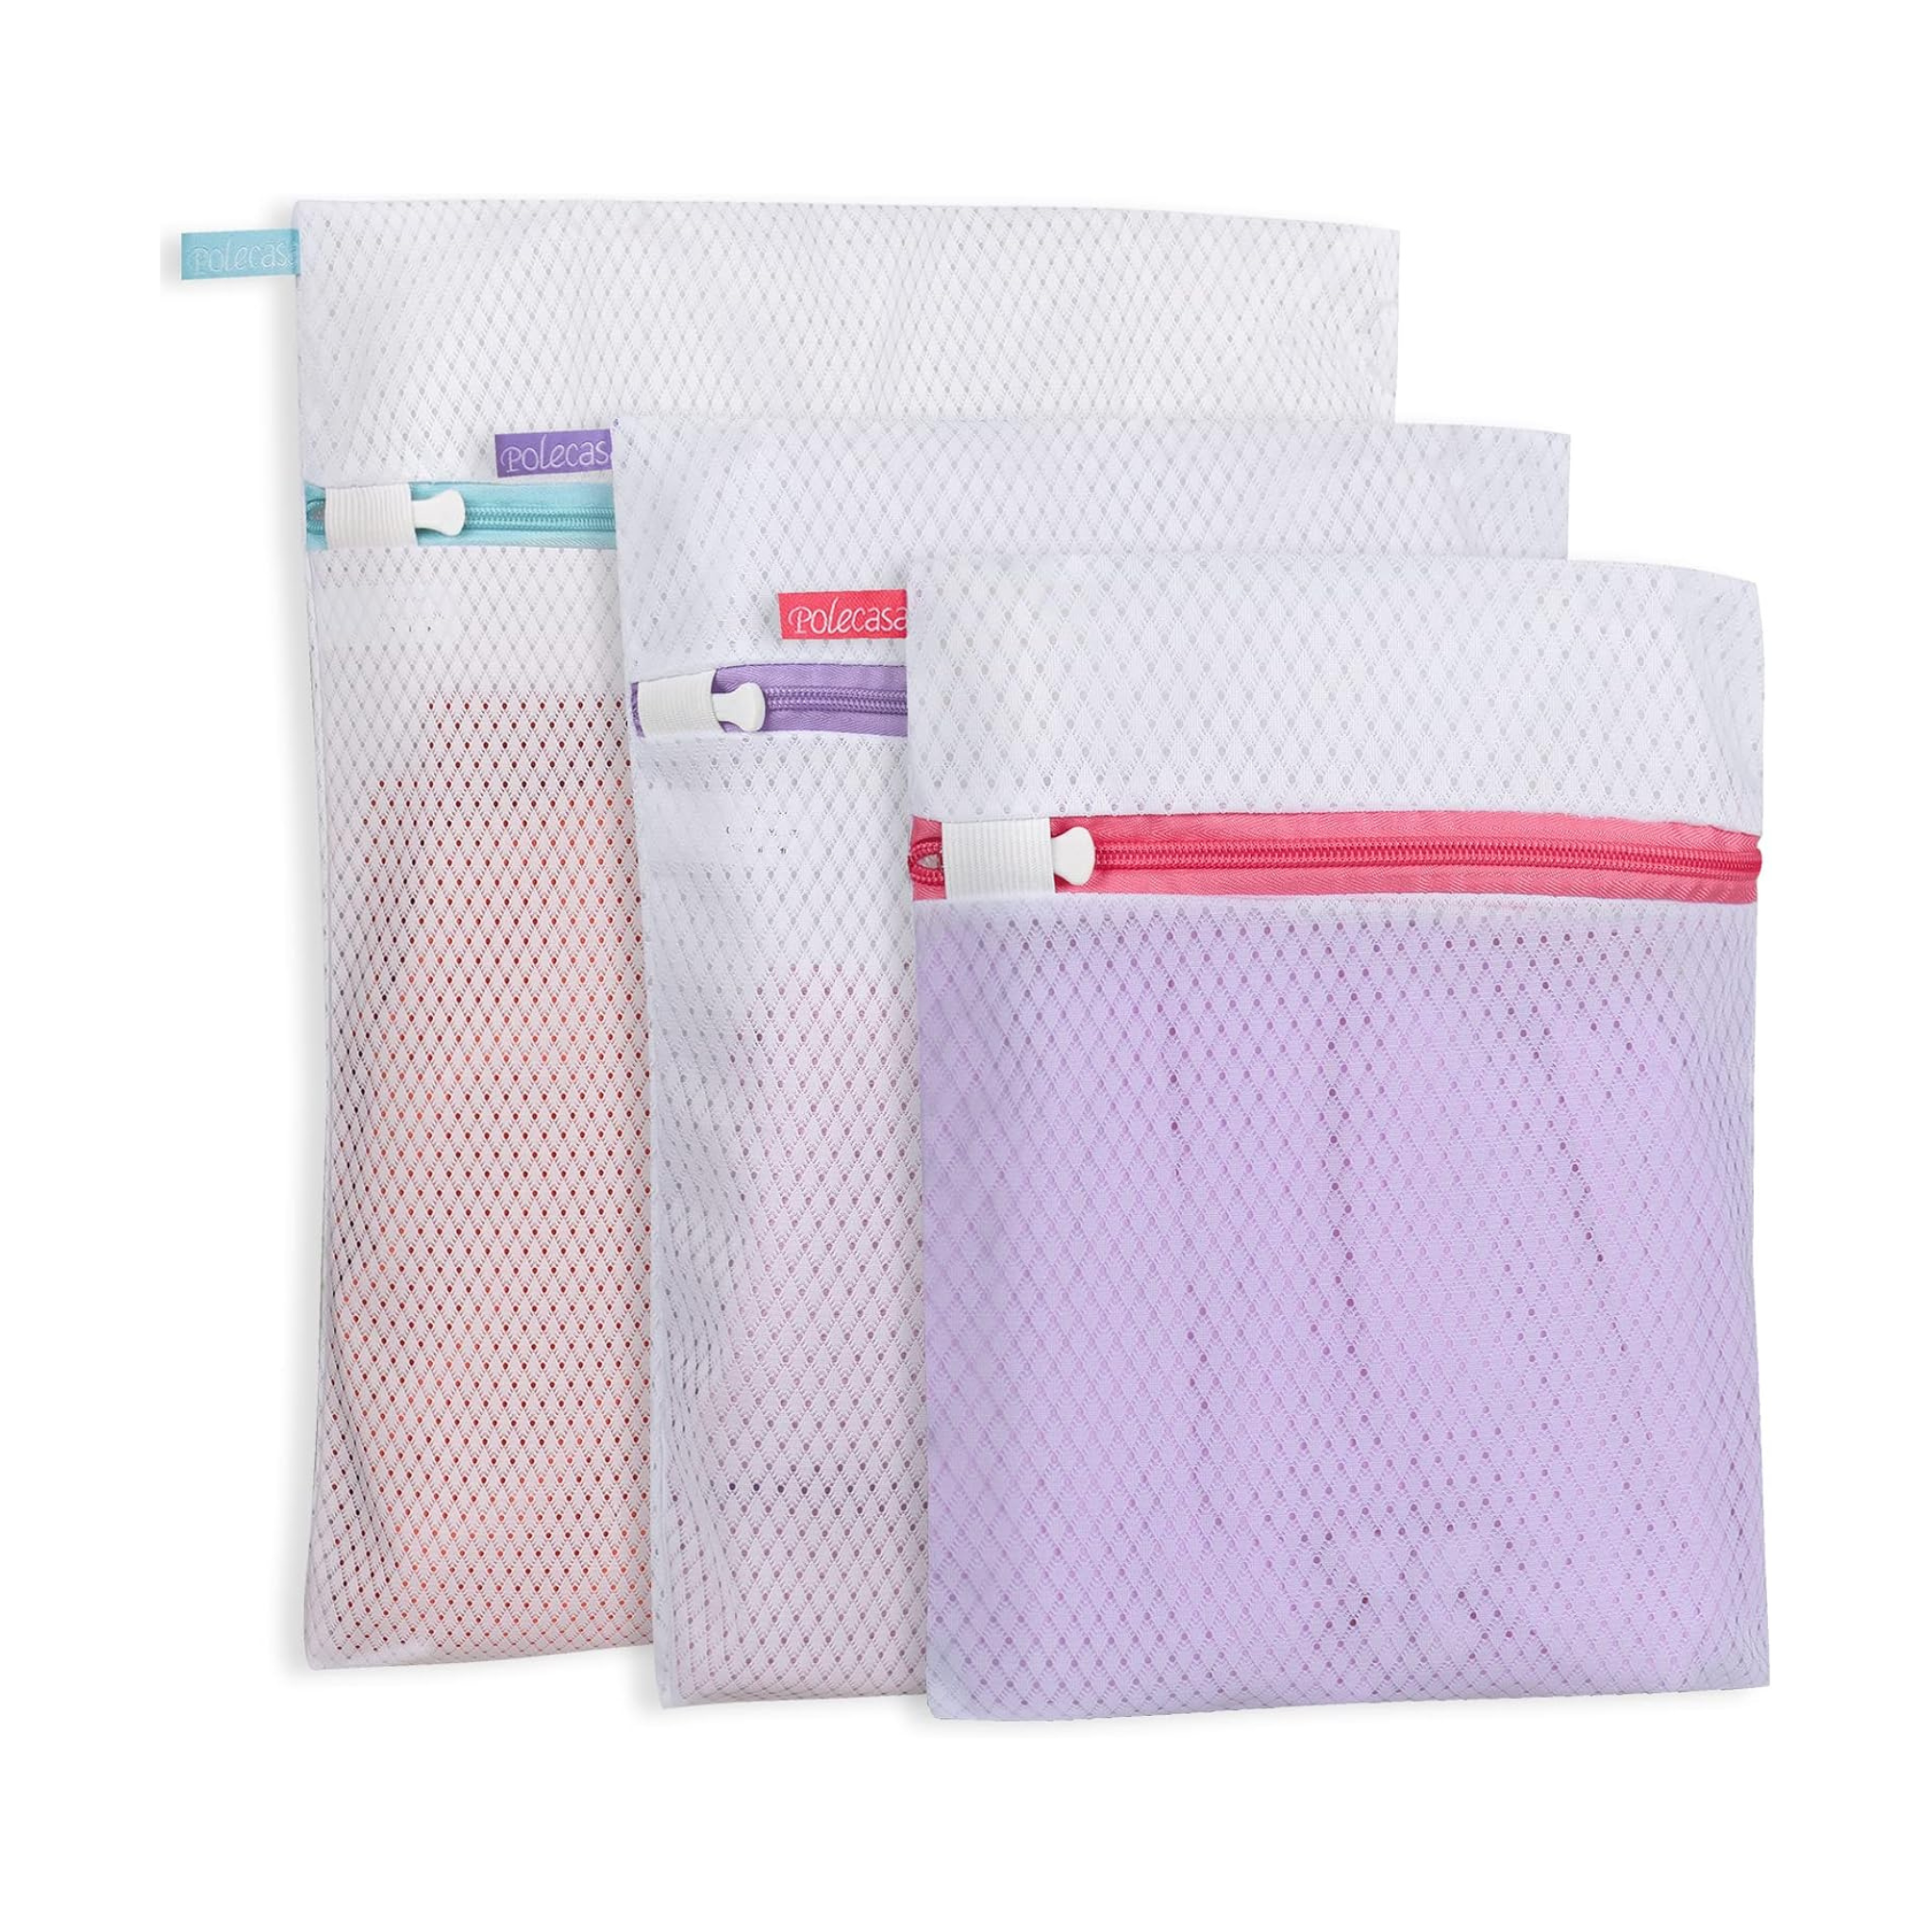 3-Pack Polecasa Durable 125g Diamond Mesh Laundry Bags